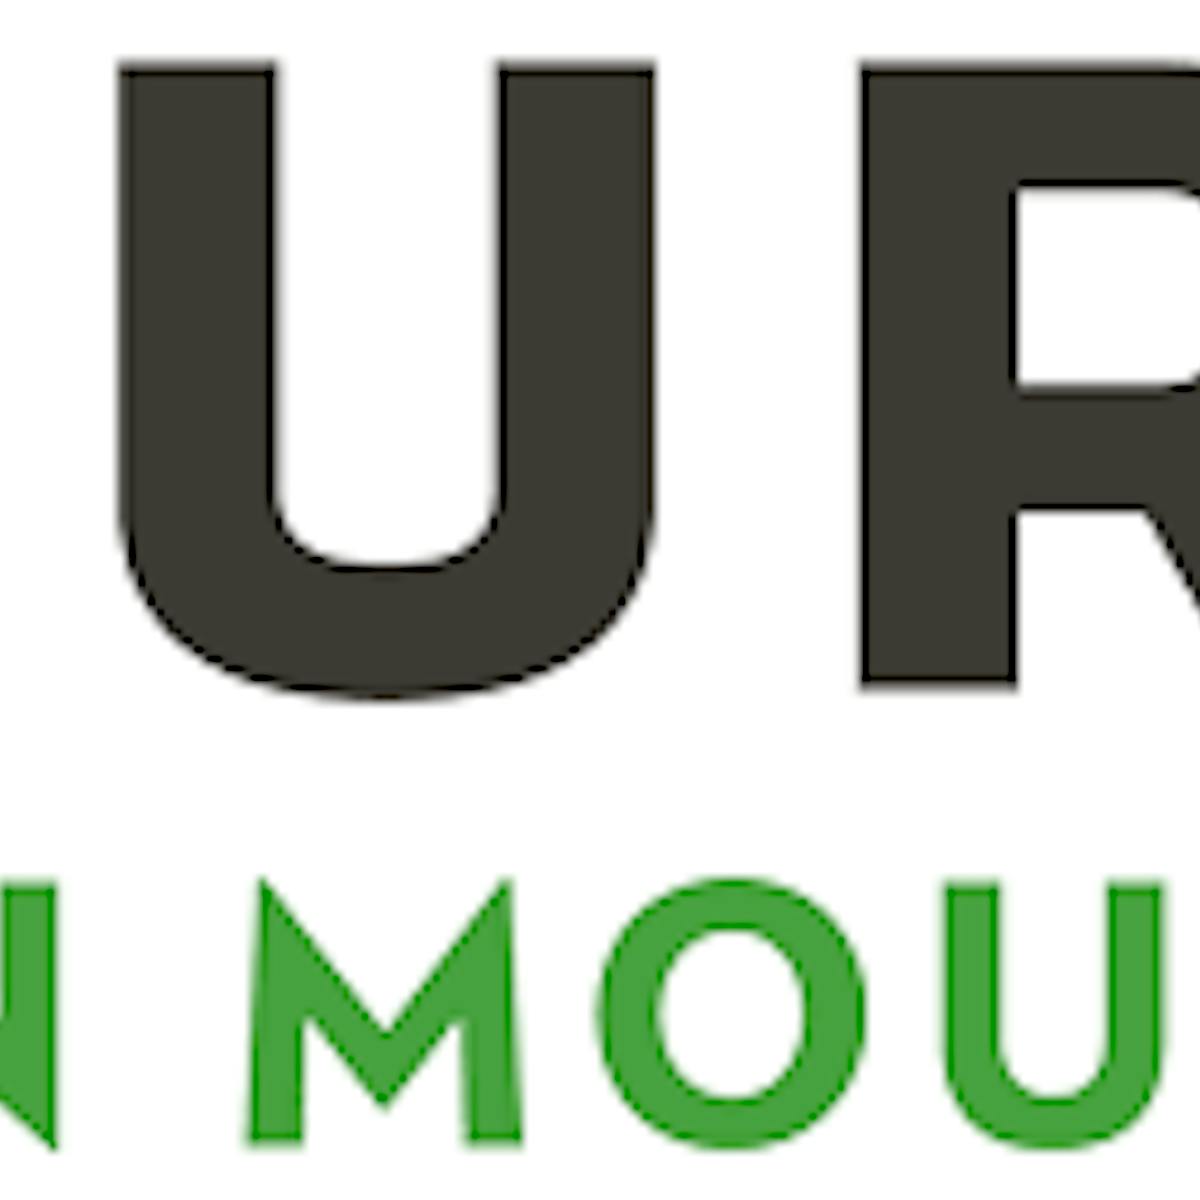 keurig green mountain logo 58b83a7756723